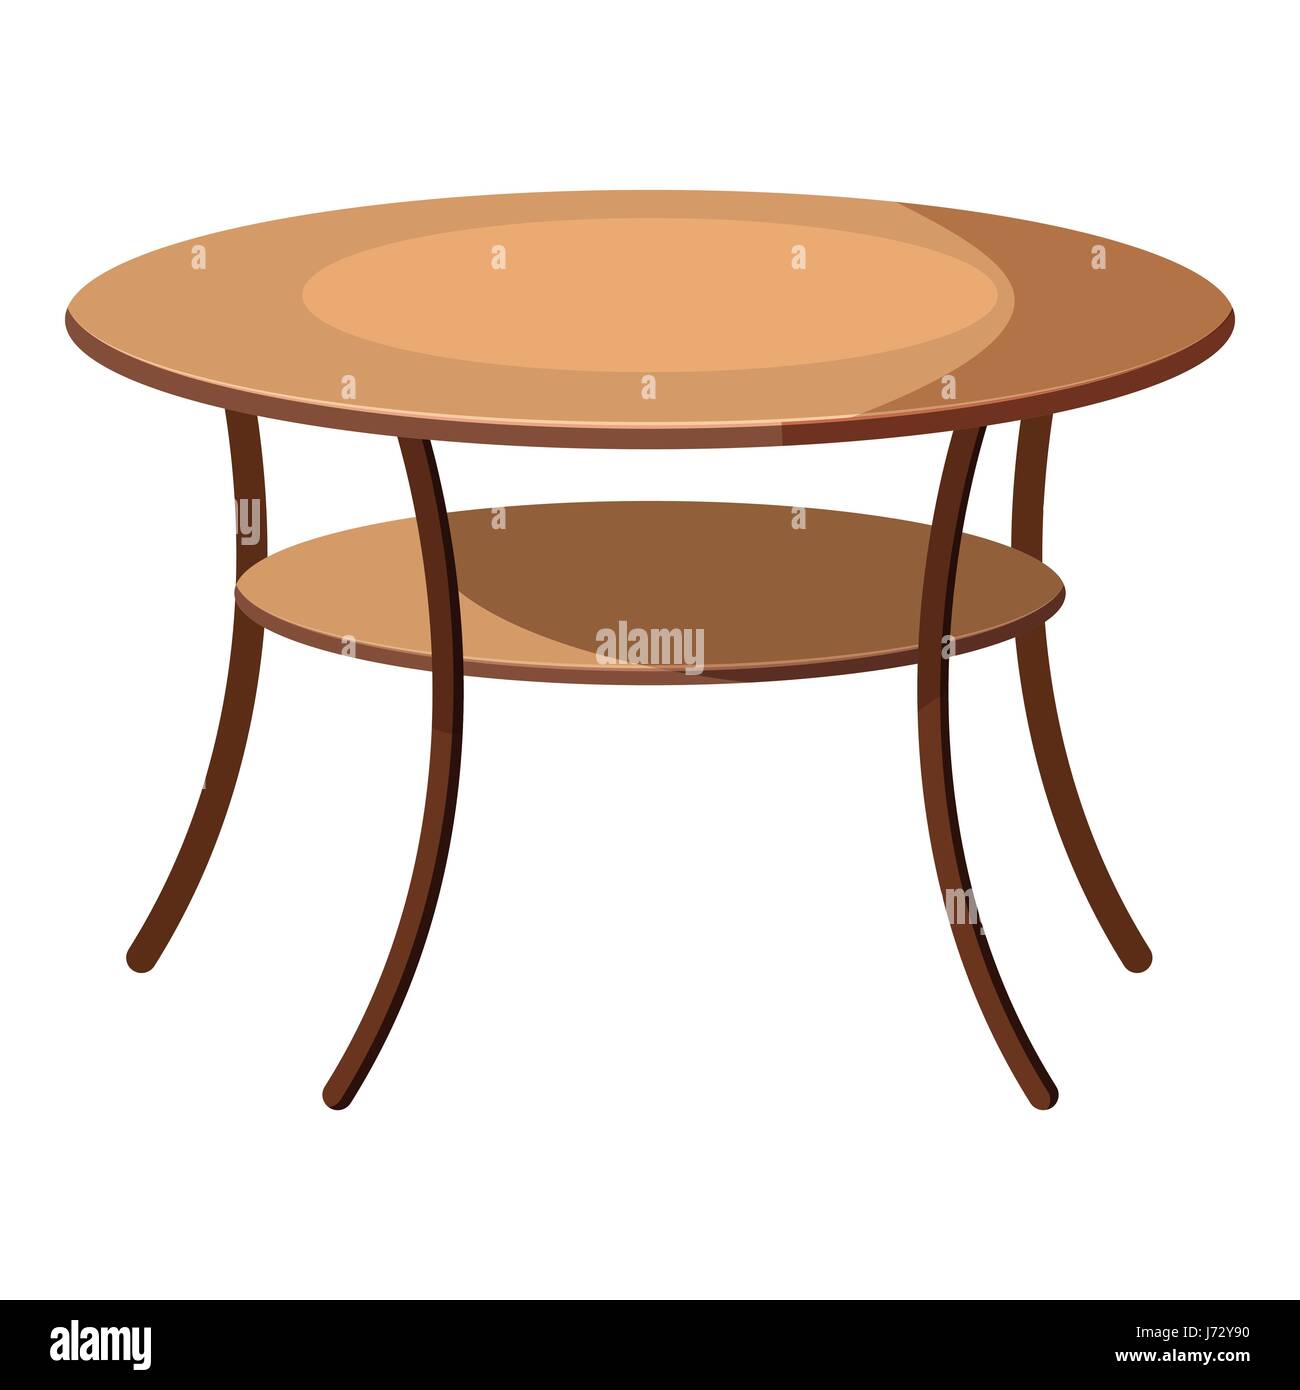 Runder Tisch Symbol, Cartoon-Stil Stock-Vektorgrafik - Alamy